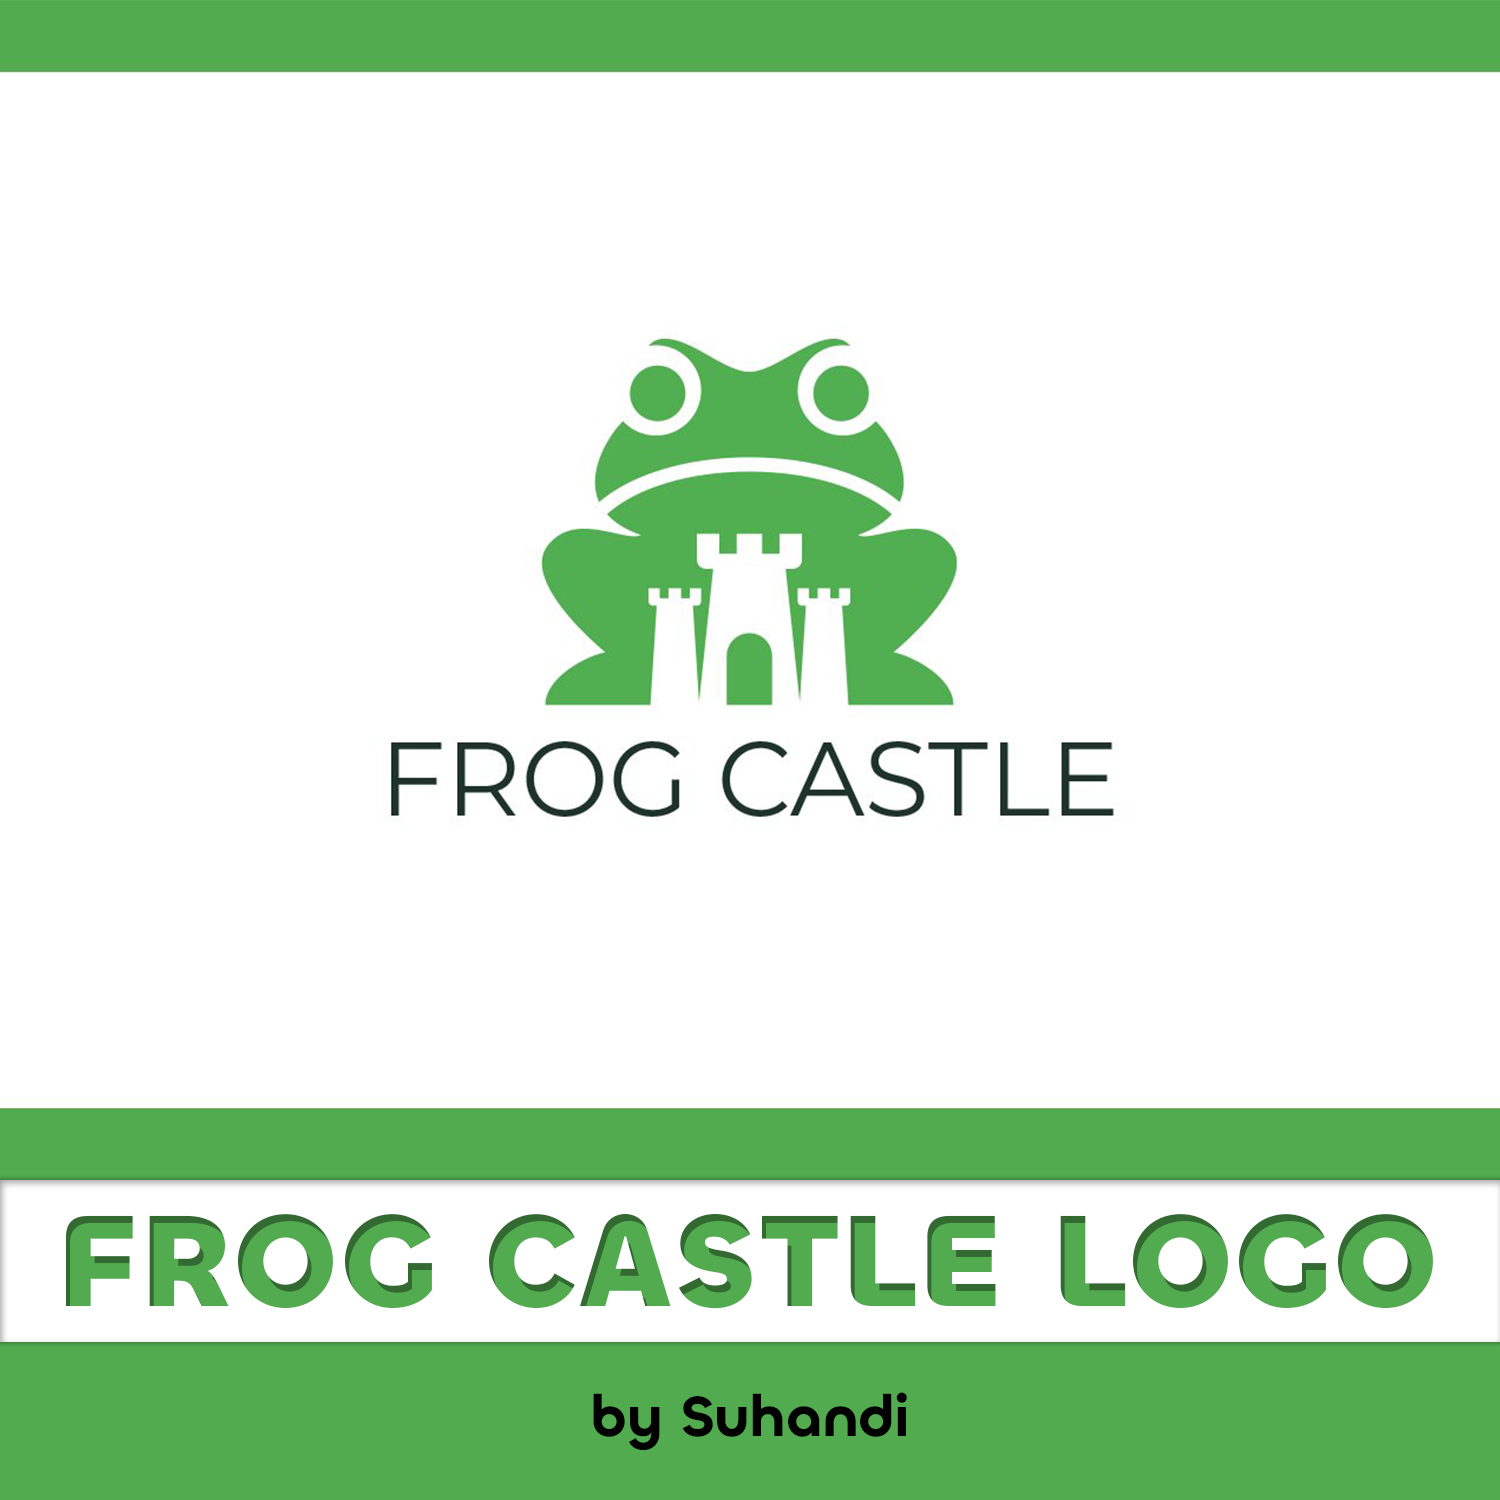 Frog Castle Logo cover.